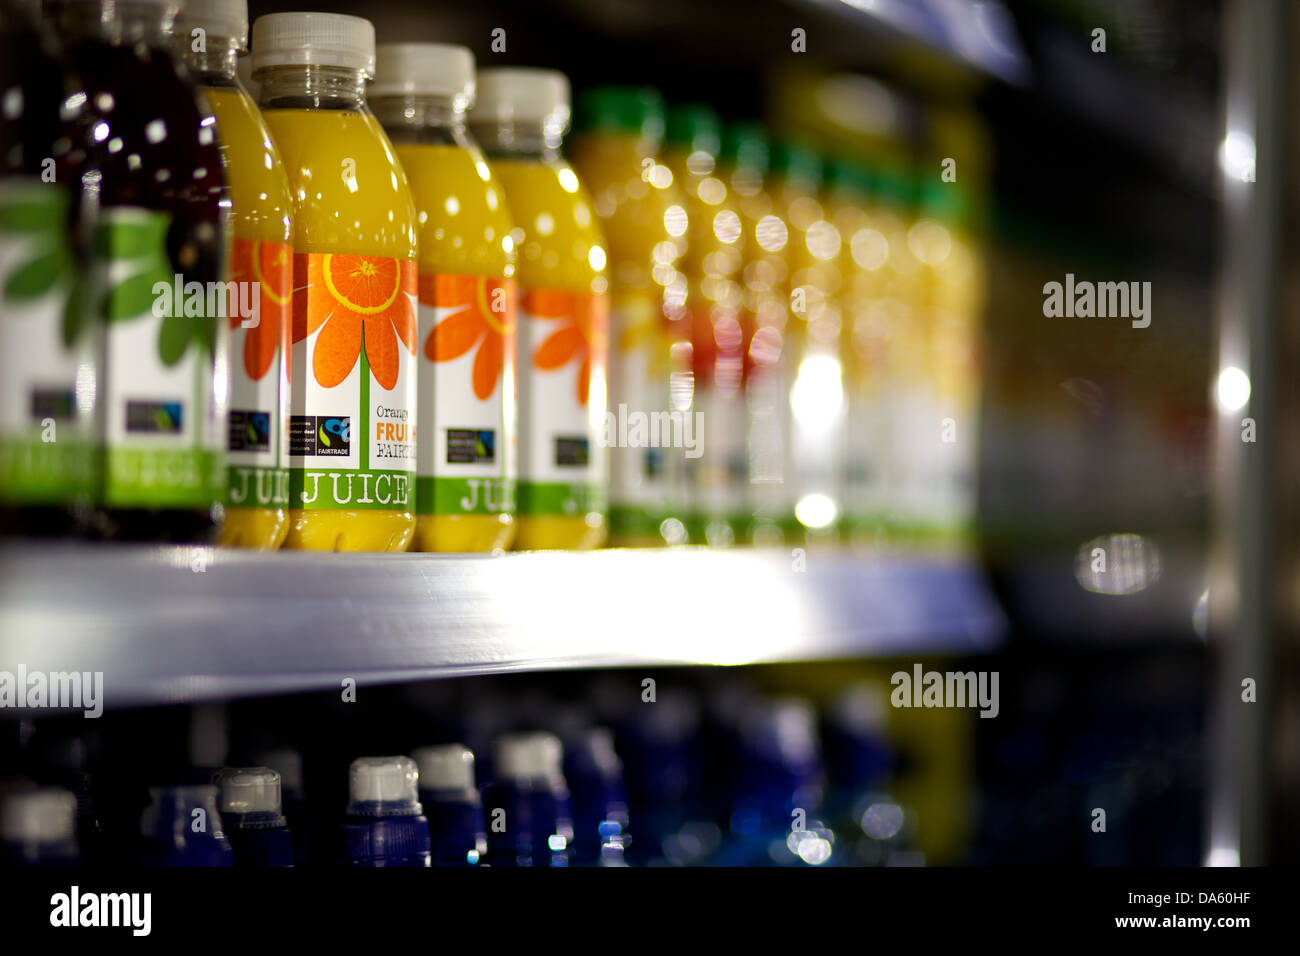 https://c8.alamy.com/comp/DA60HF/bottles-of-water-and-juice-on-a-supermarket-shelf-DA60HF.jpg